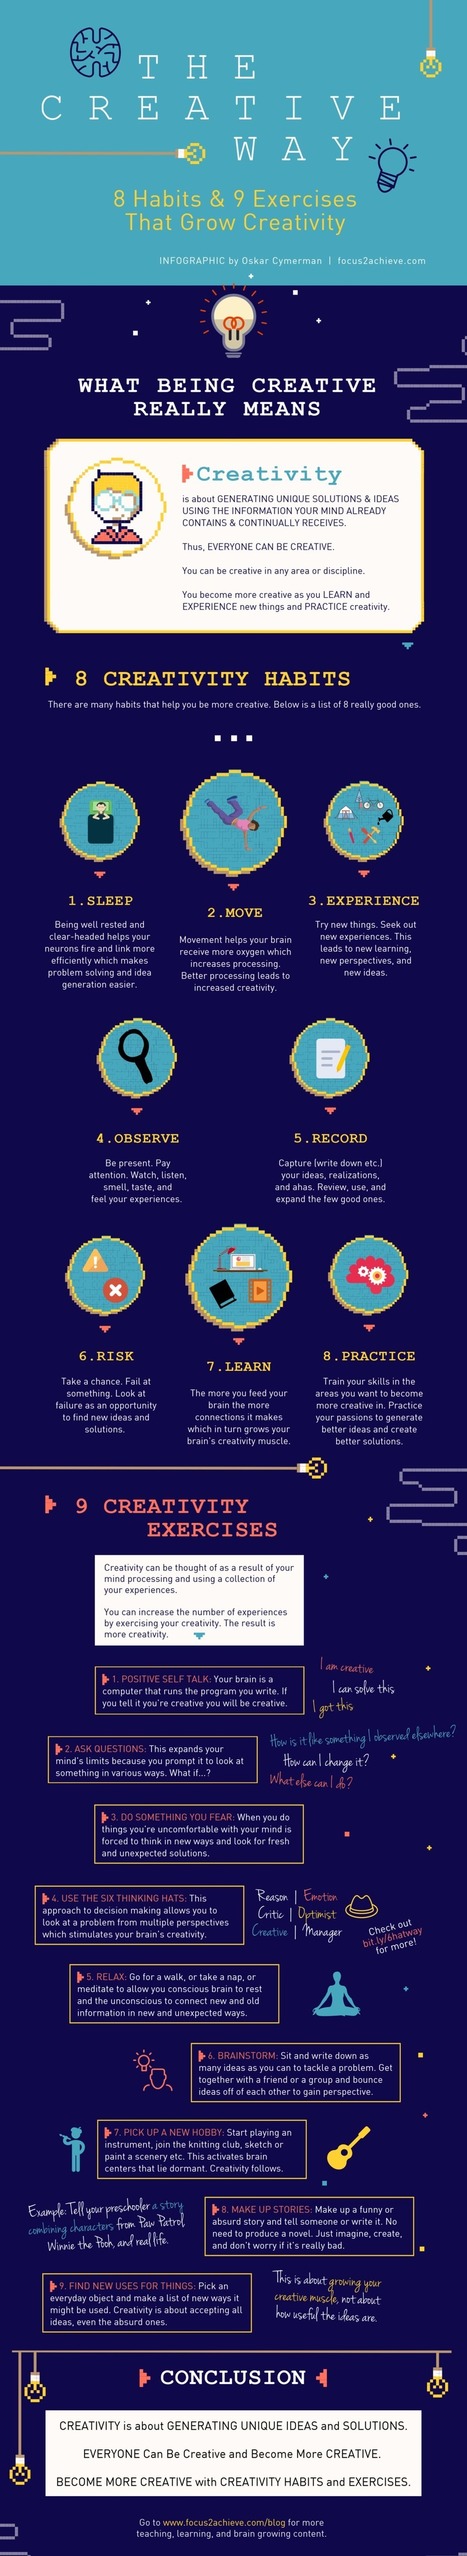 8 Habits & 9 Exercises That Grow Creativity via Oskar Cymerman | iGeneration - 21st Century Education (Pedagogy & Digital Innovation) | Scoop.it